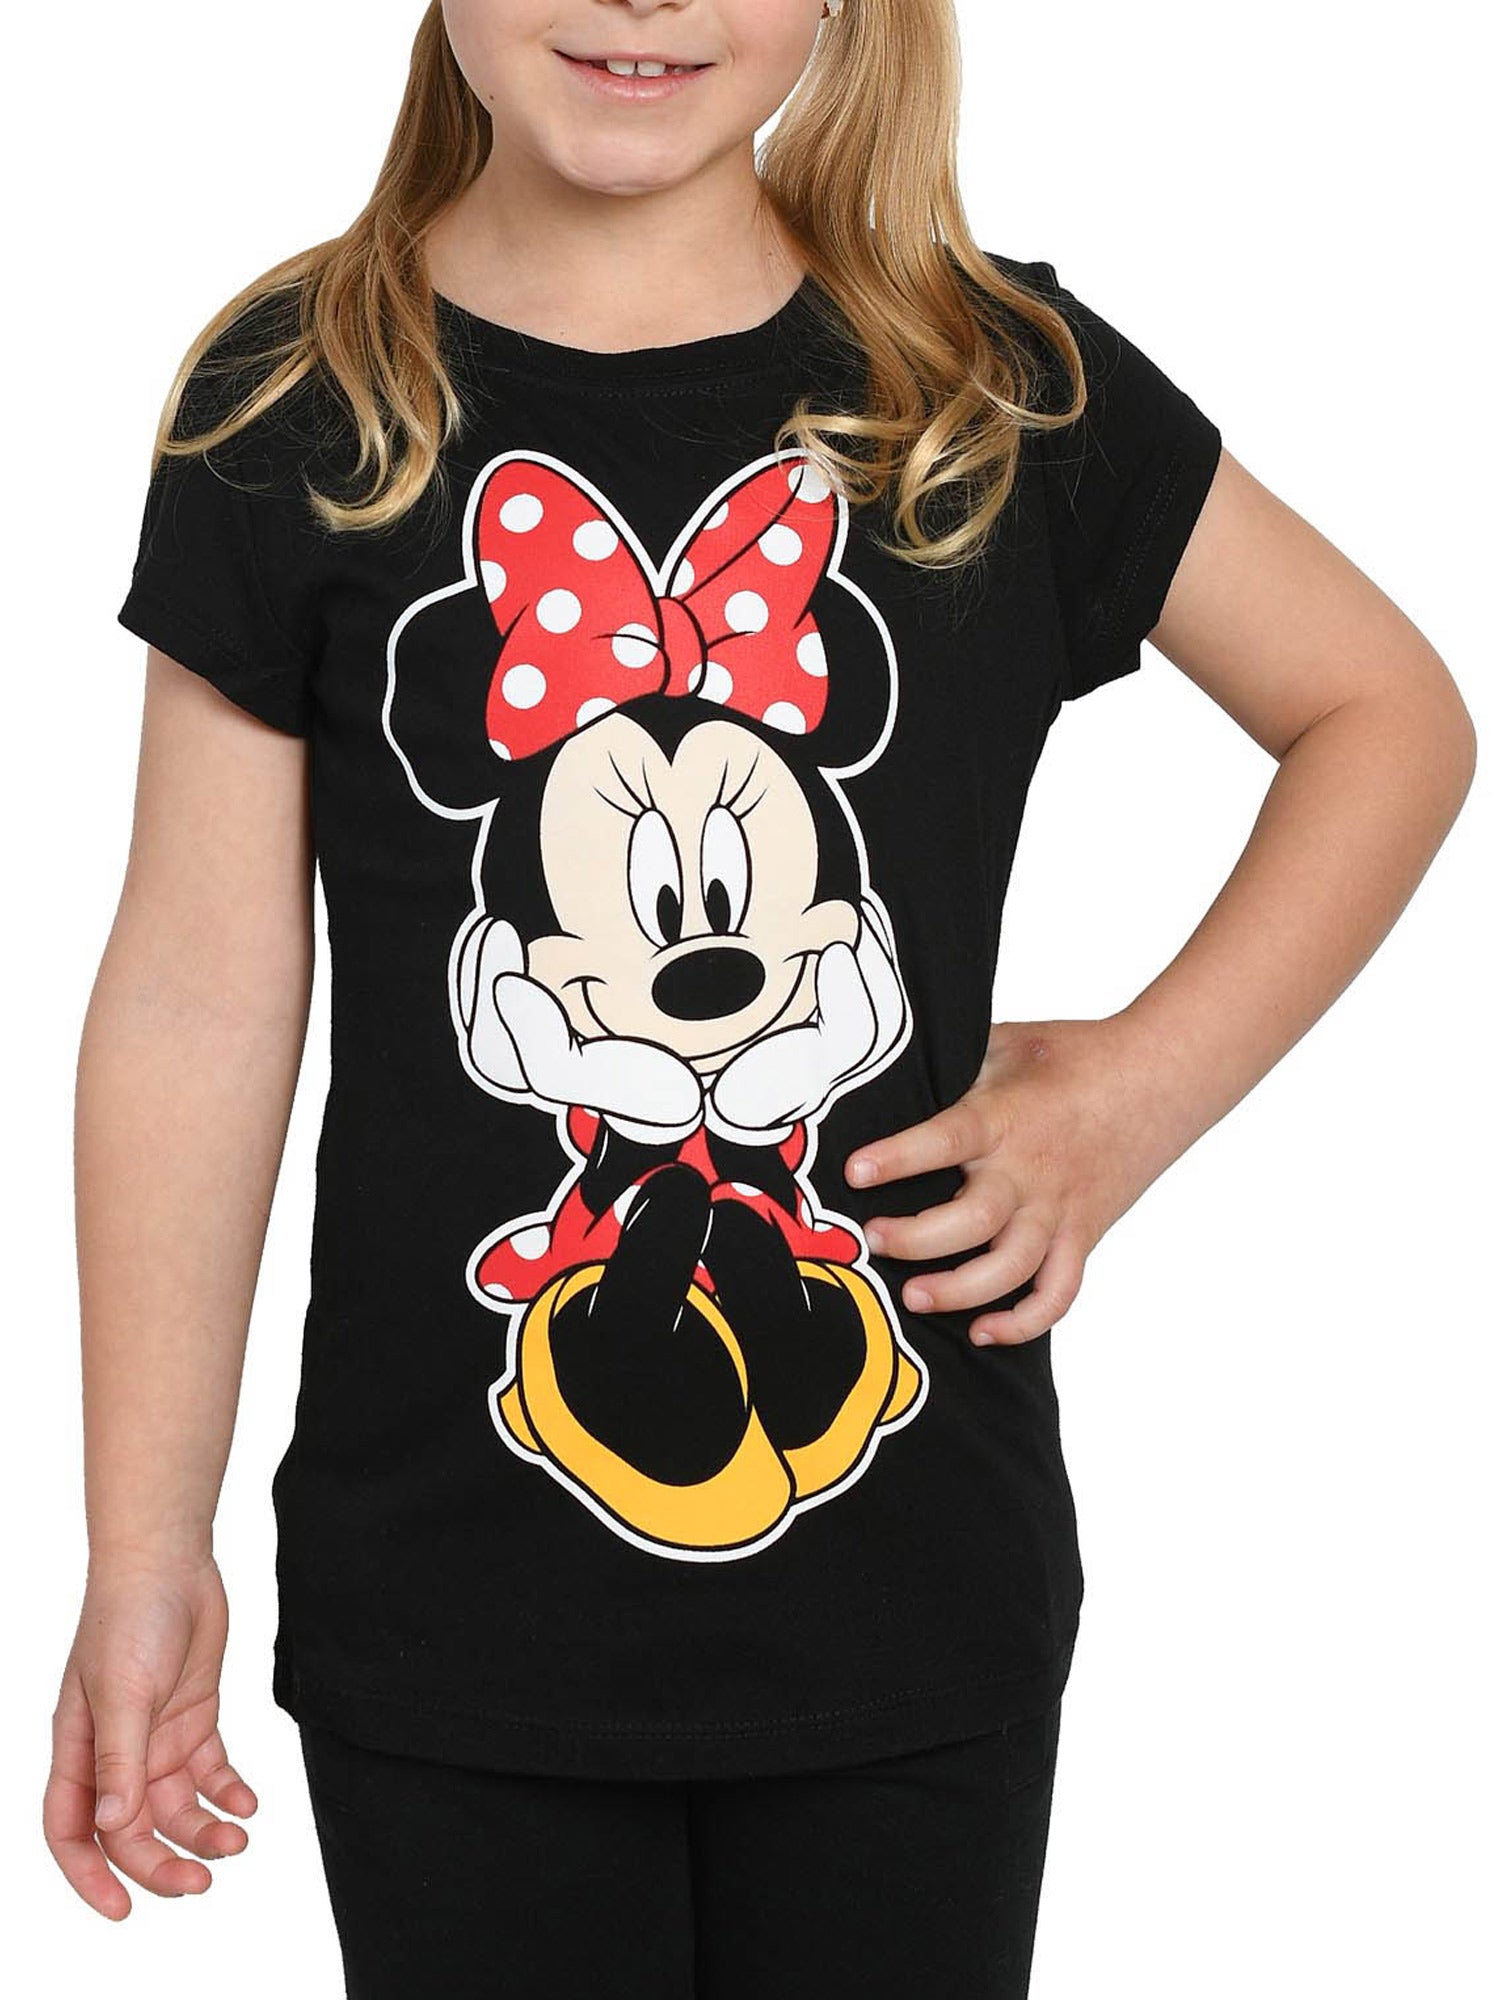 Disney Girls Minnie Mouse Graphic T-Shirt Front & Back Design Black Size XL